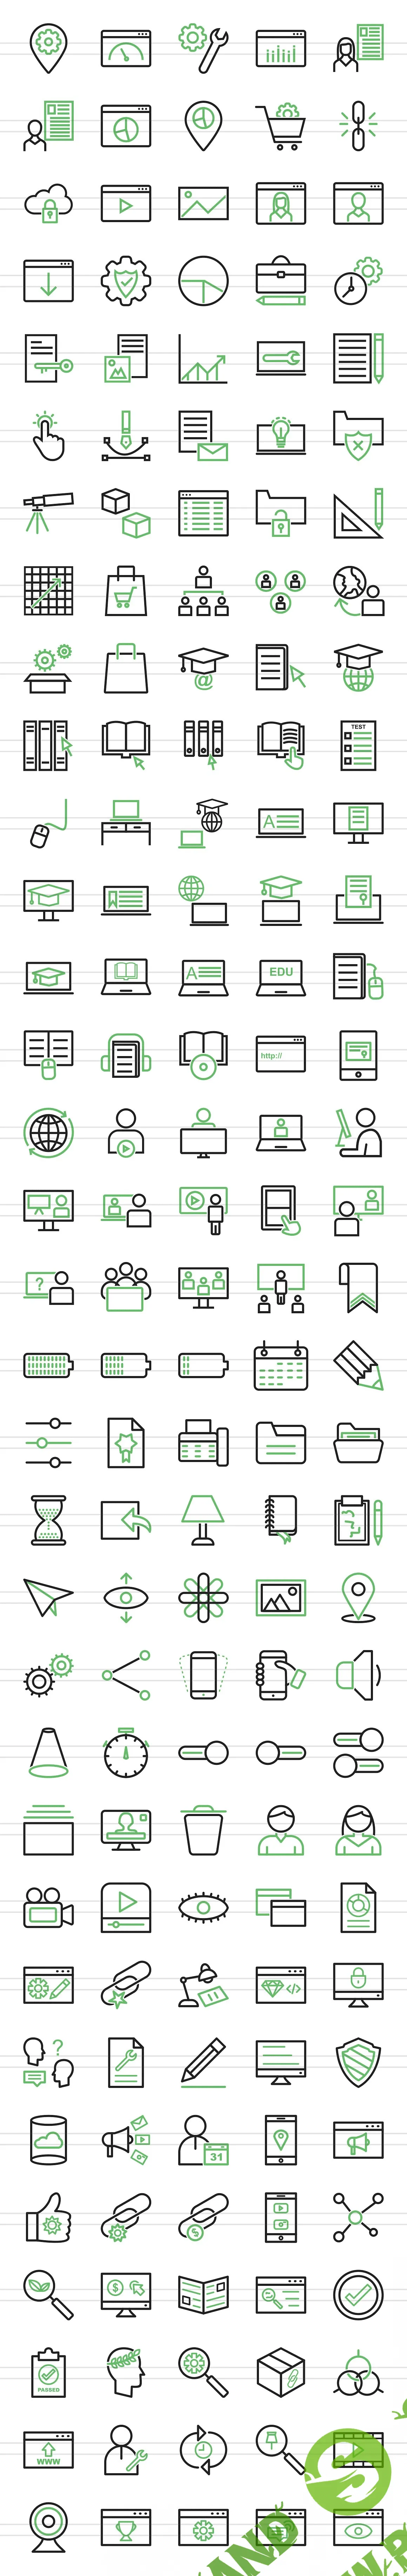 [Creativemarket] 166 Web Line Icons (2018)